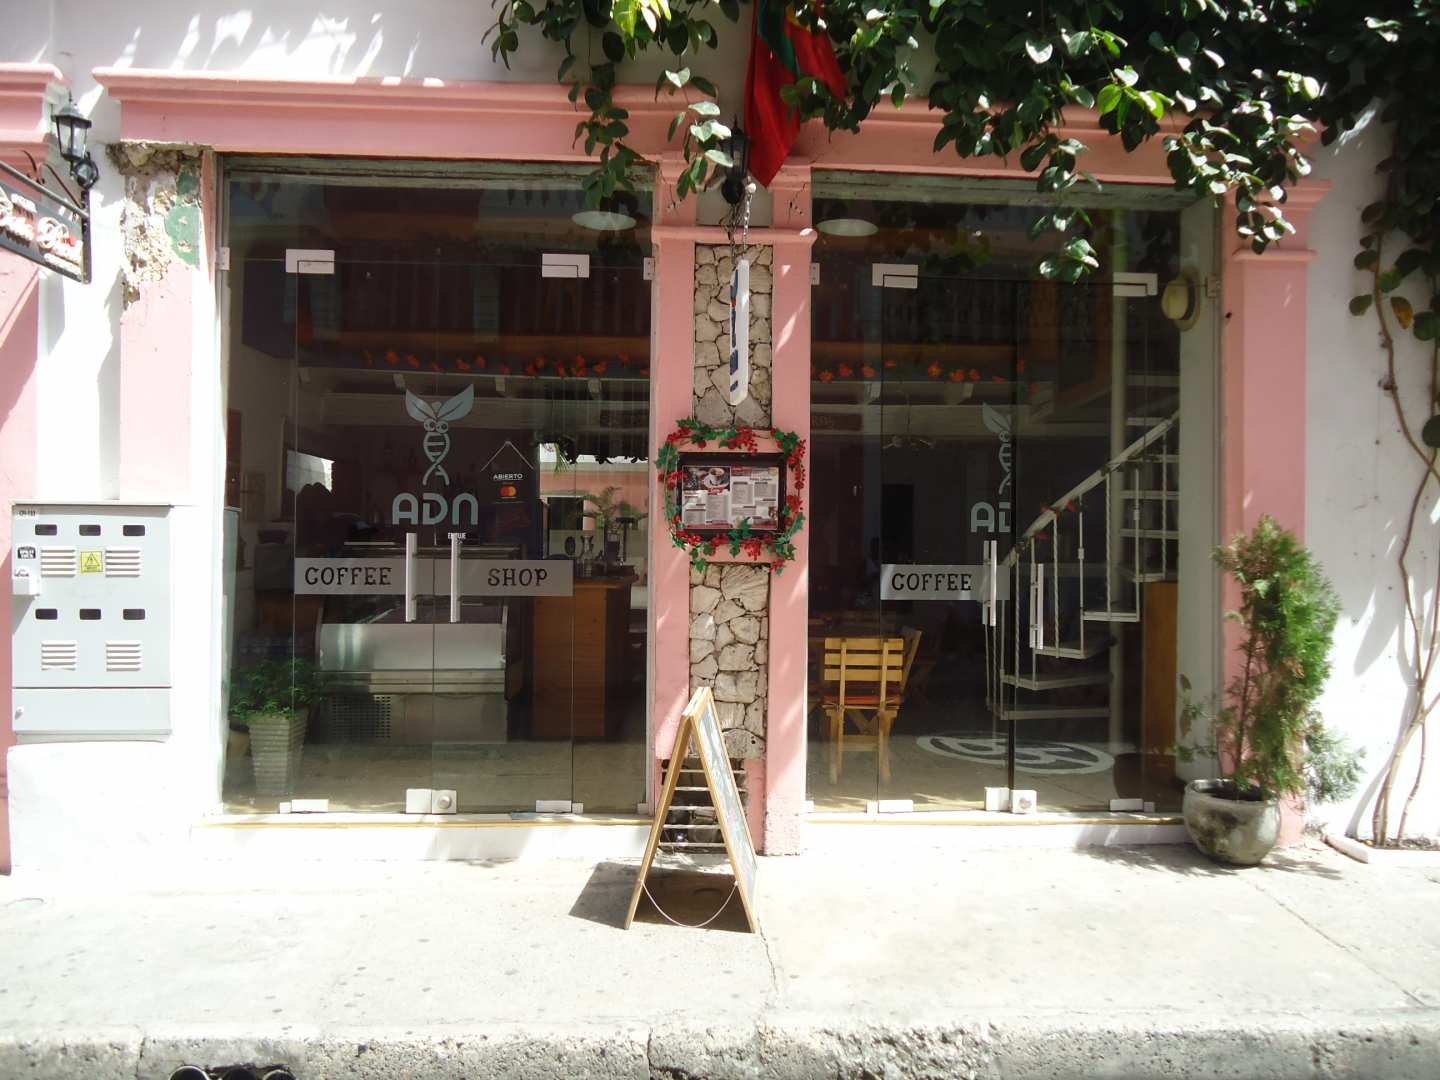 Adn Cafe